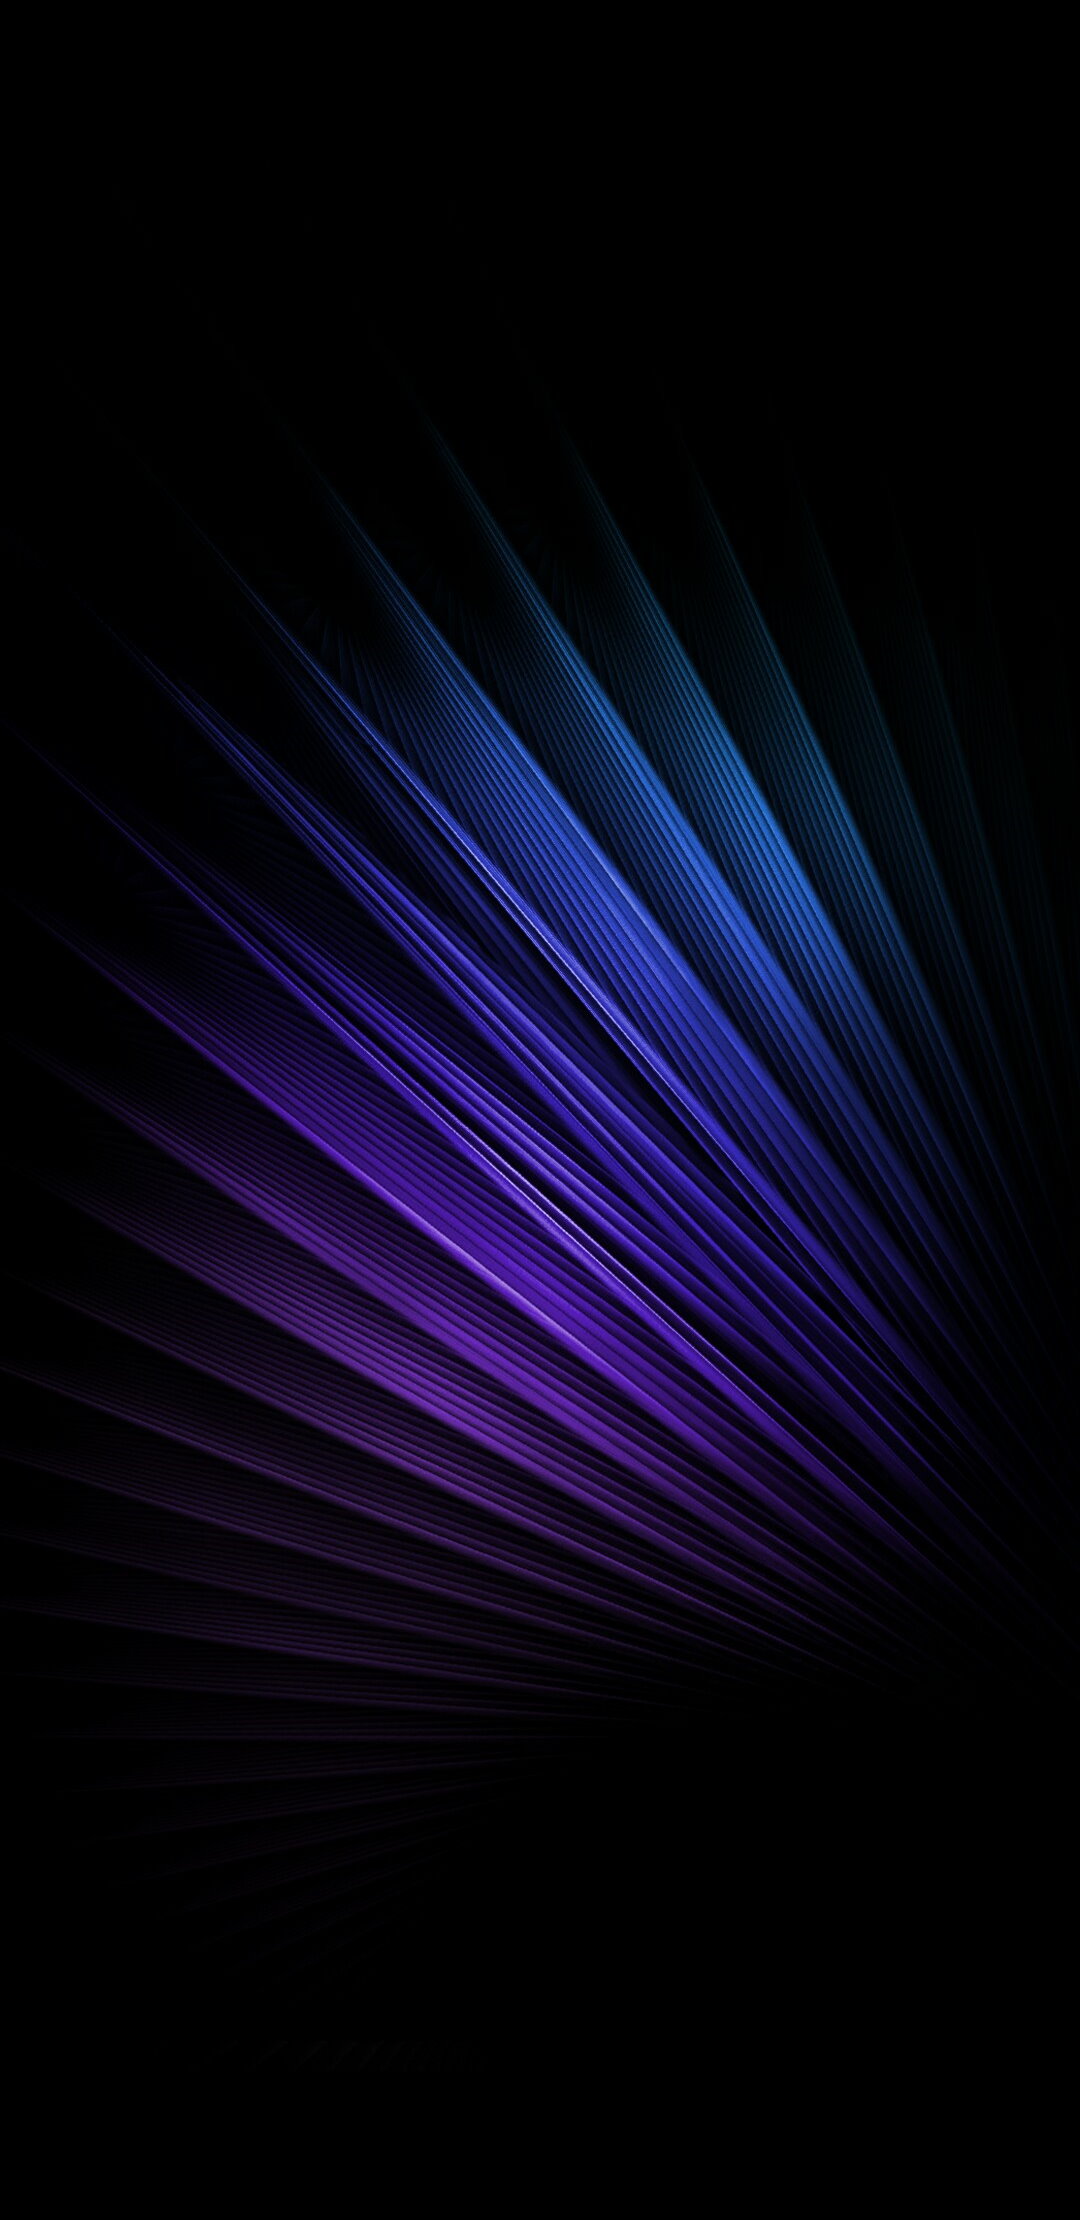 galaxy a8 wallpaper,blue,black,violet,purple,light